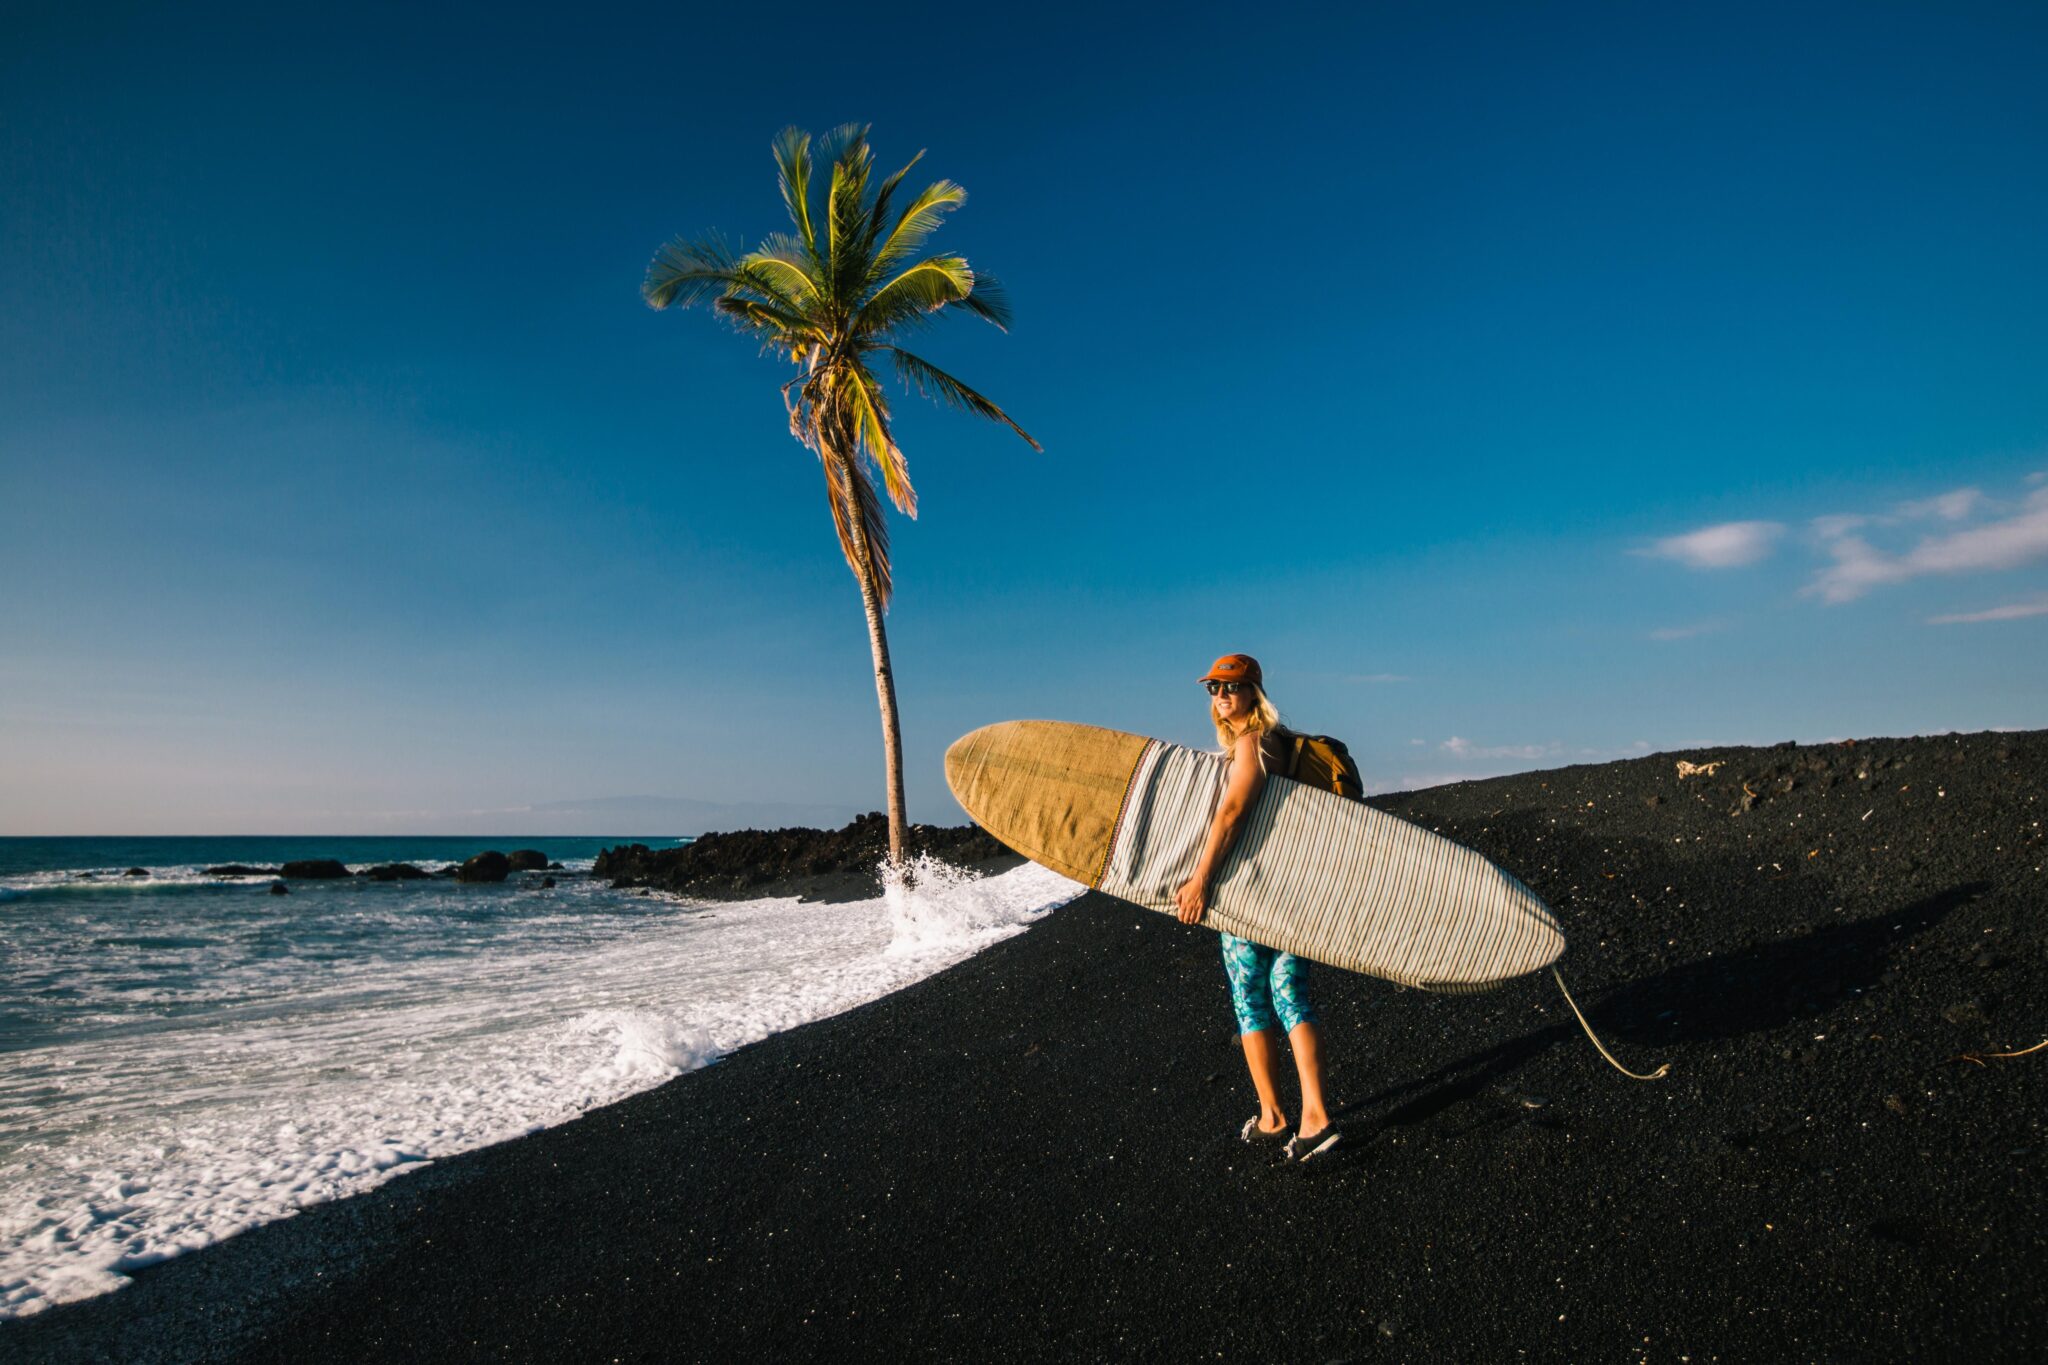 A woman carries a surfboard along a beach.